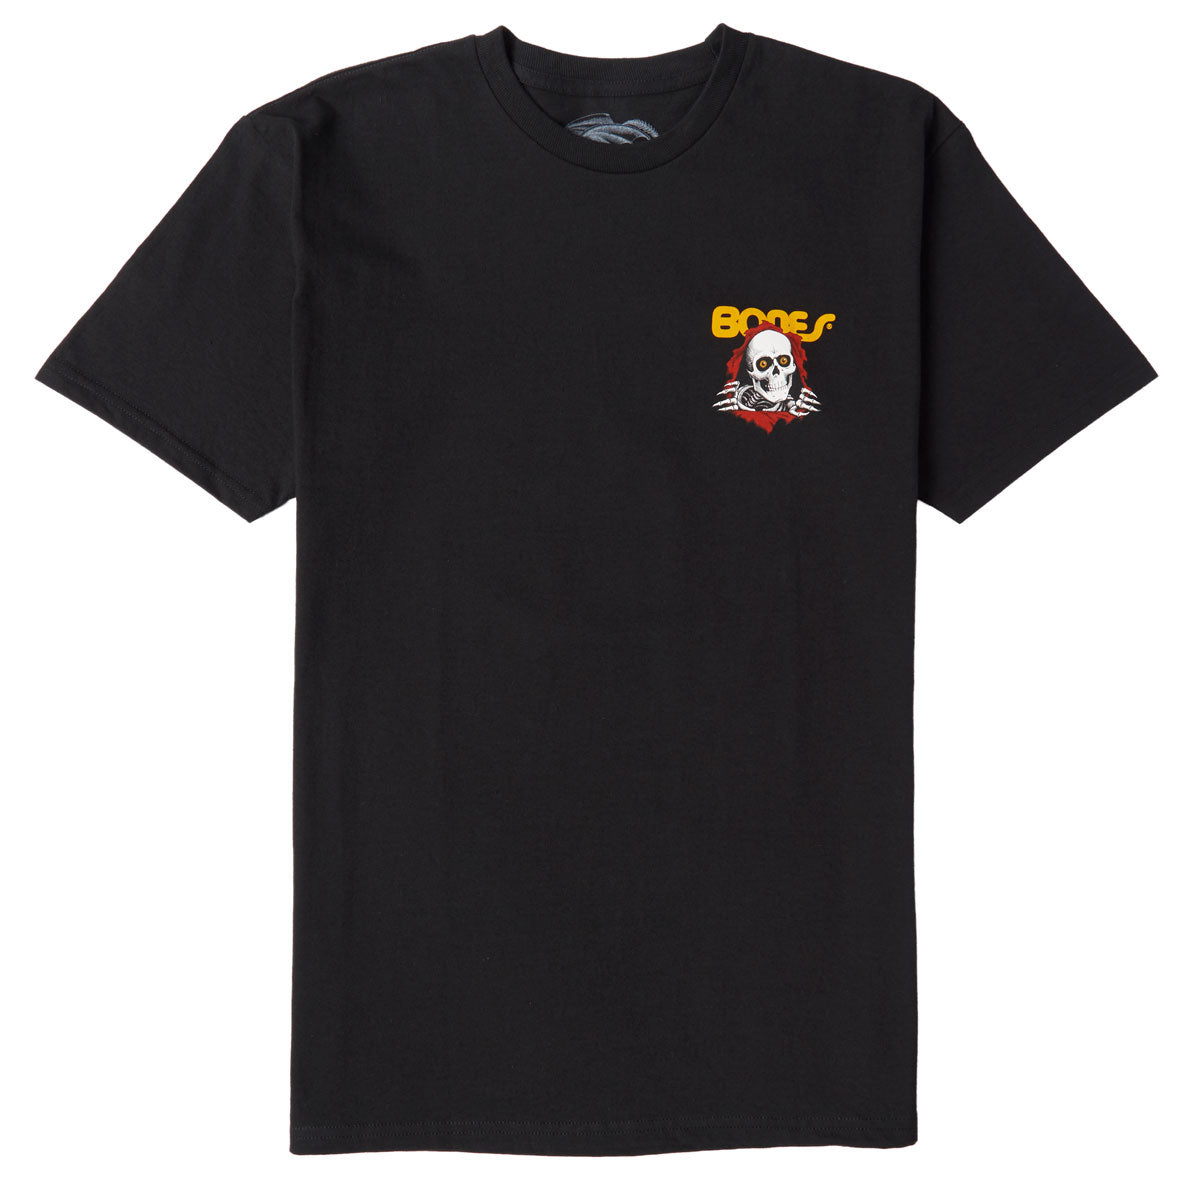 Powell-Peralta Ripper T-Shirt - Black image 1